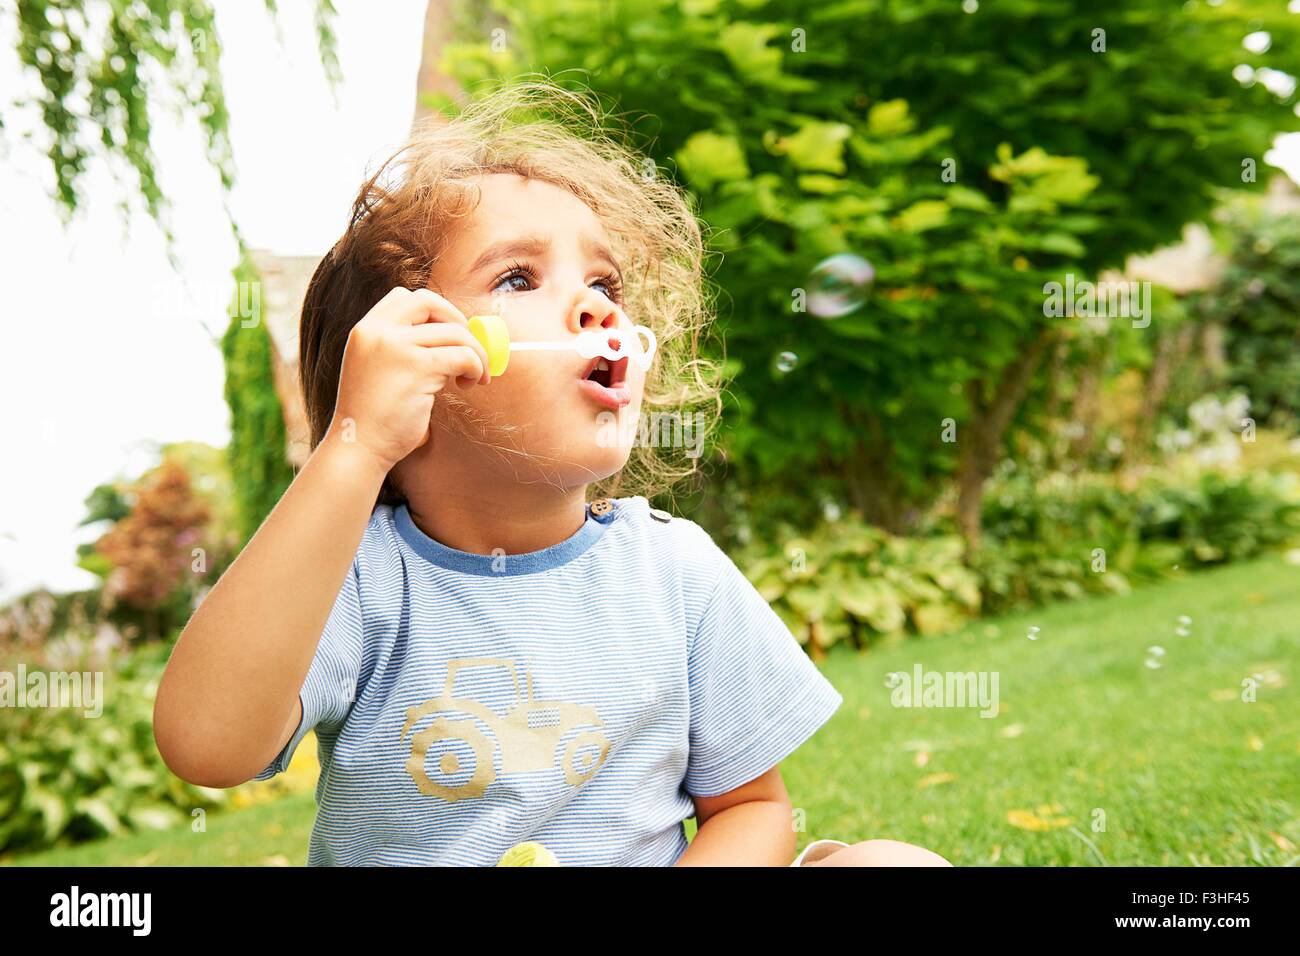 Portrait of cute girl blowing bubbles in garden Banque D'Images